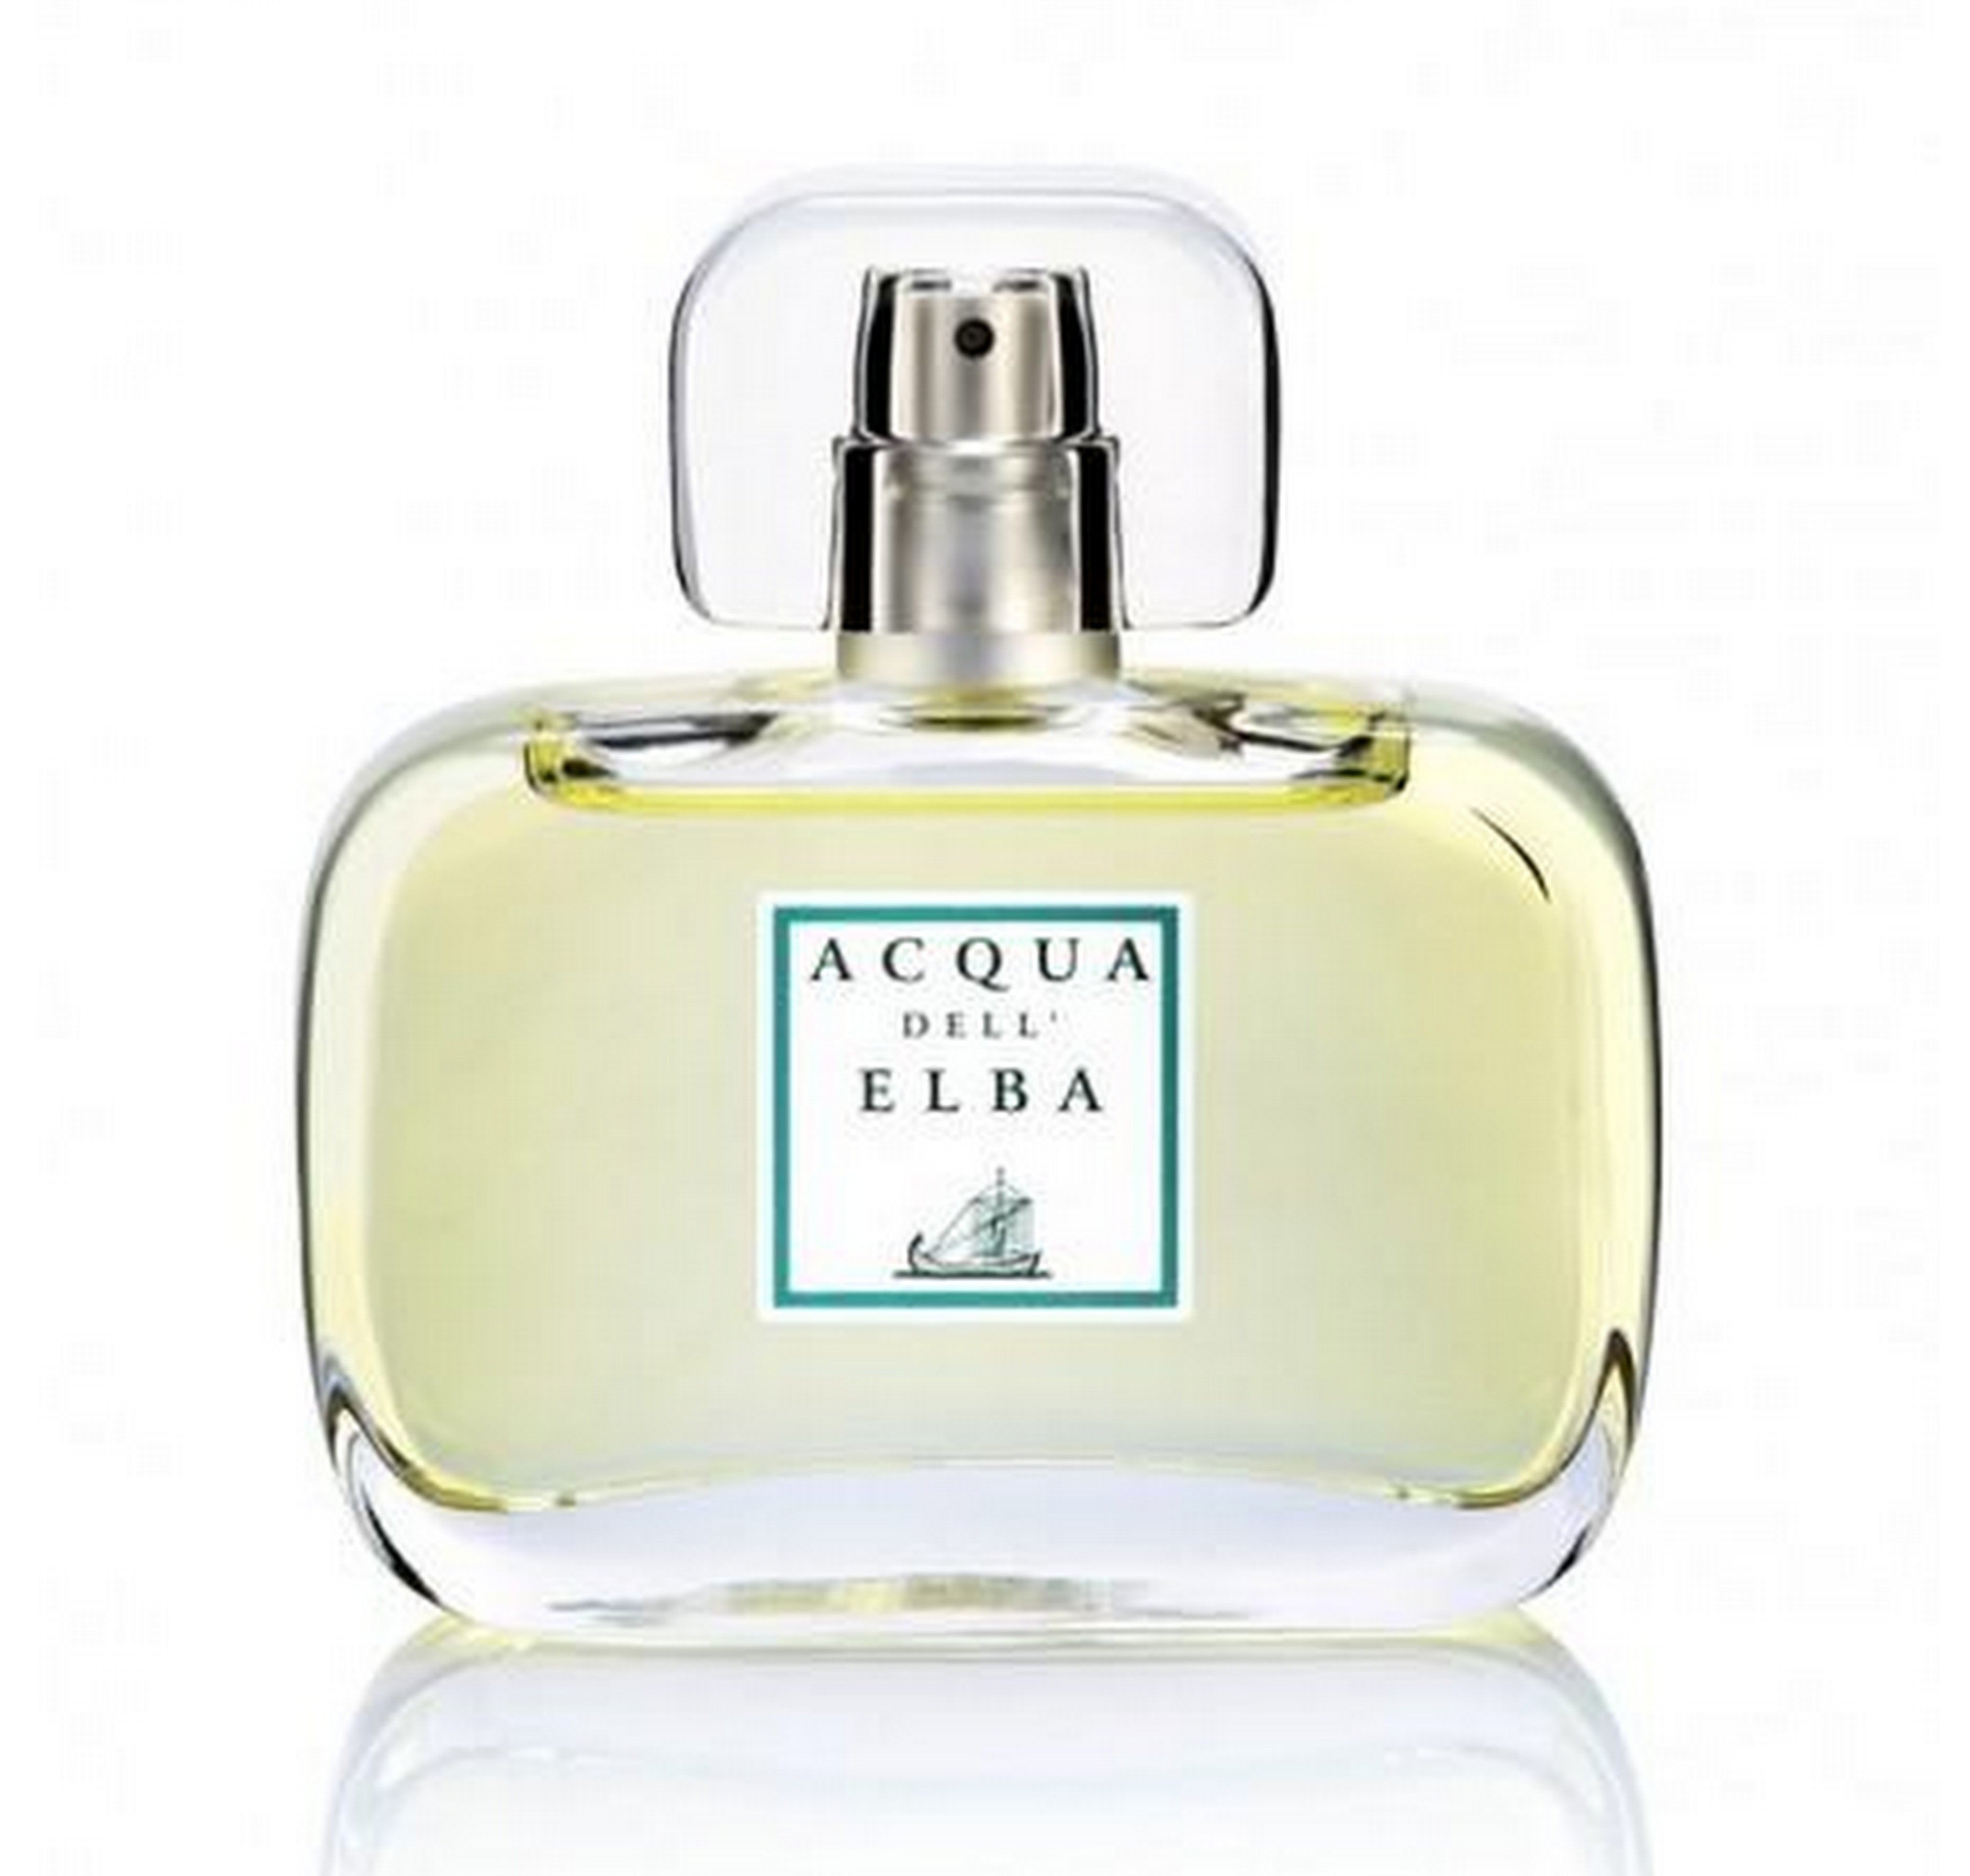 ACQUA DELL'ELBA UOMO Eau De Parfum on sale